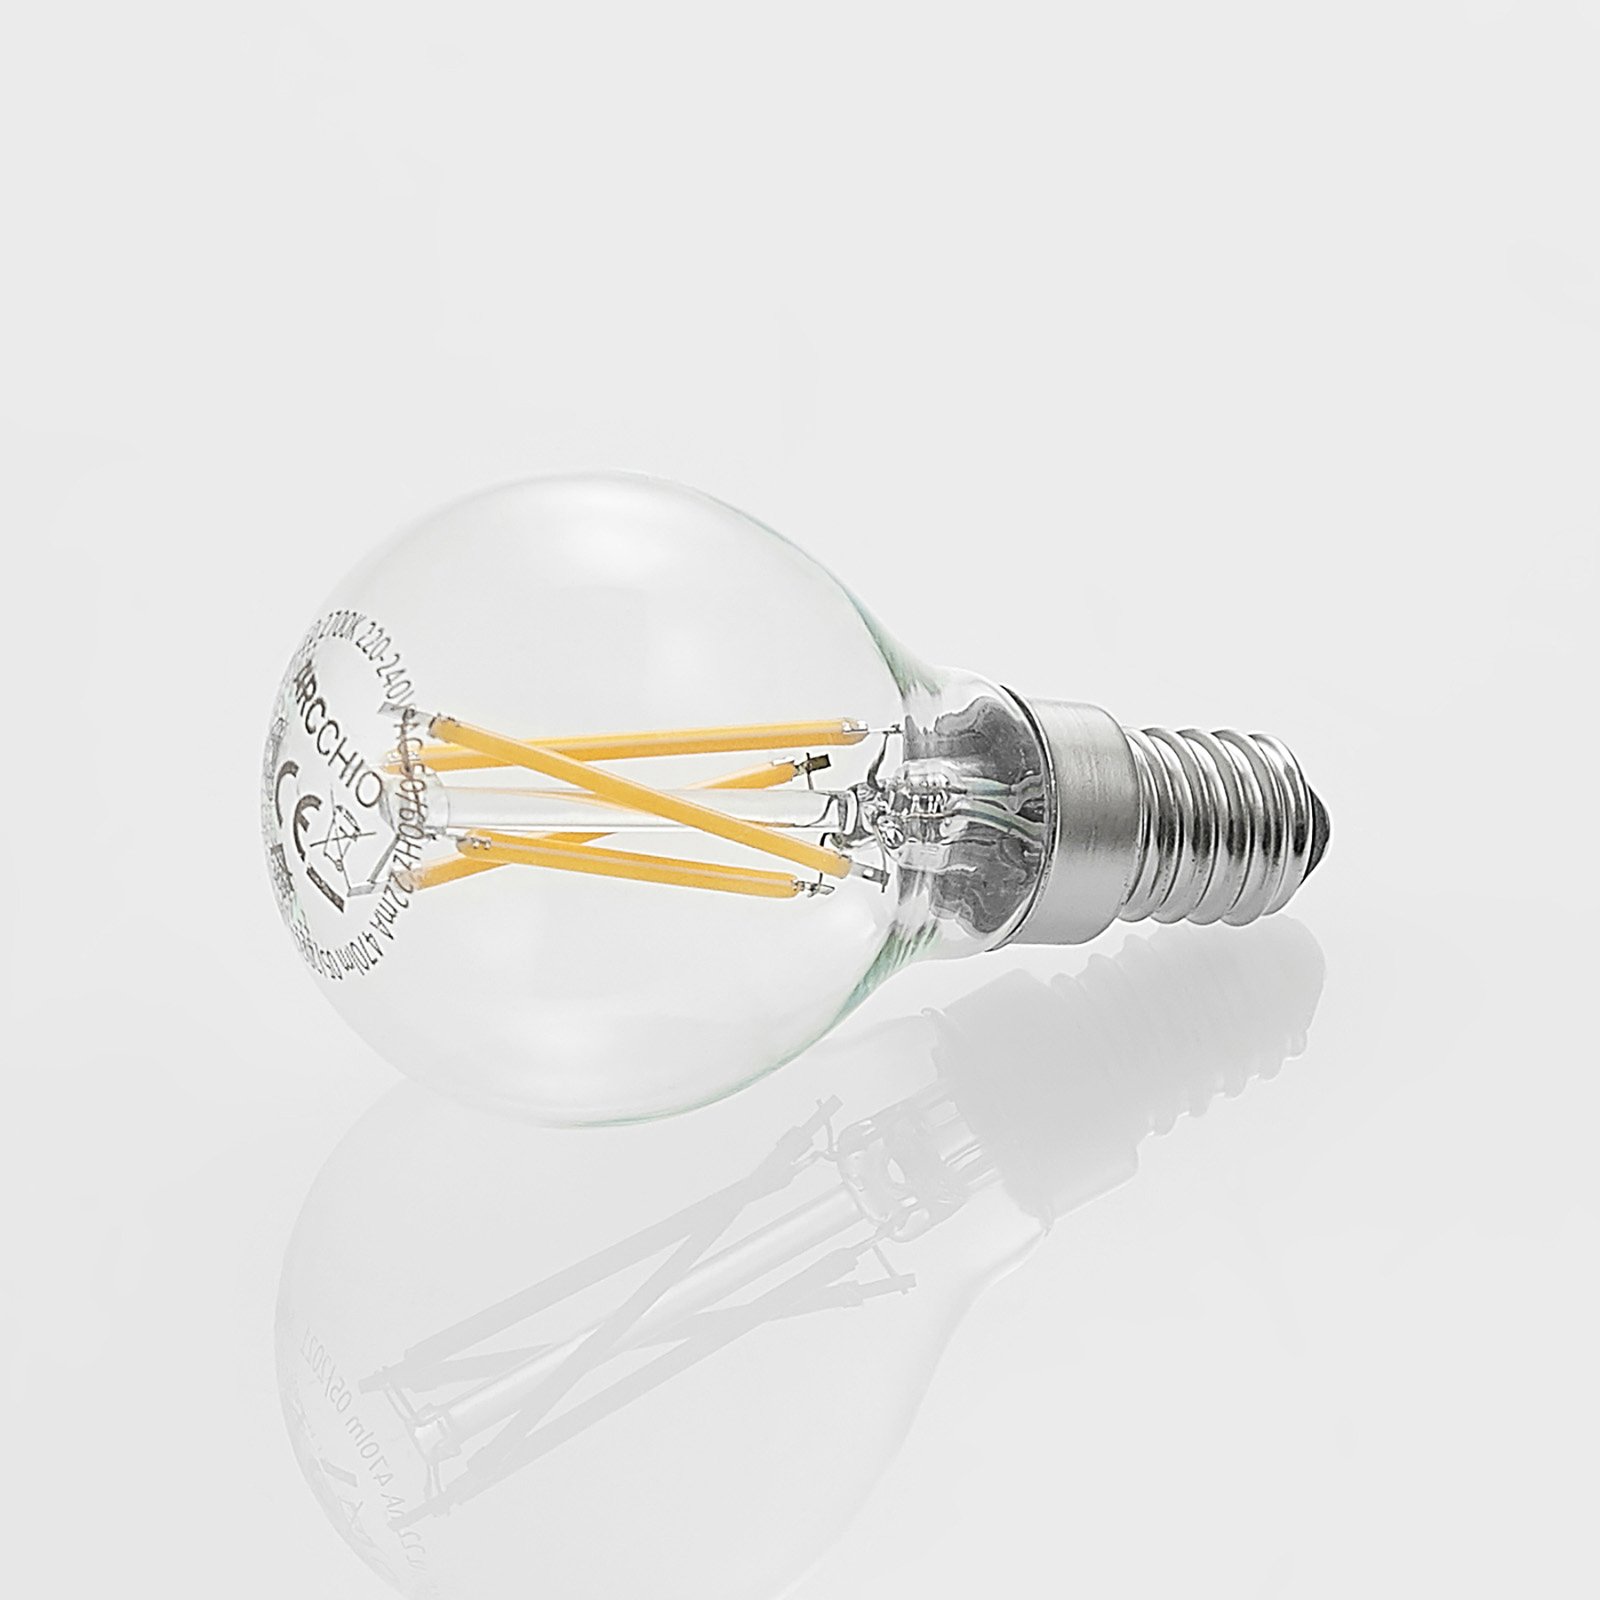 LED filament lamp E14 4W druppel dimbaar per 3